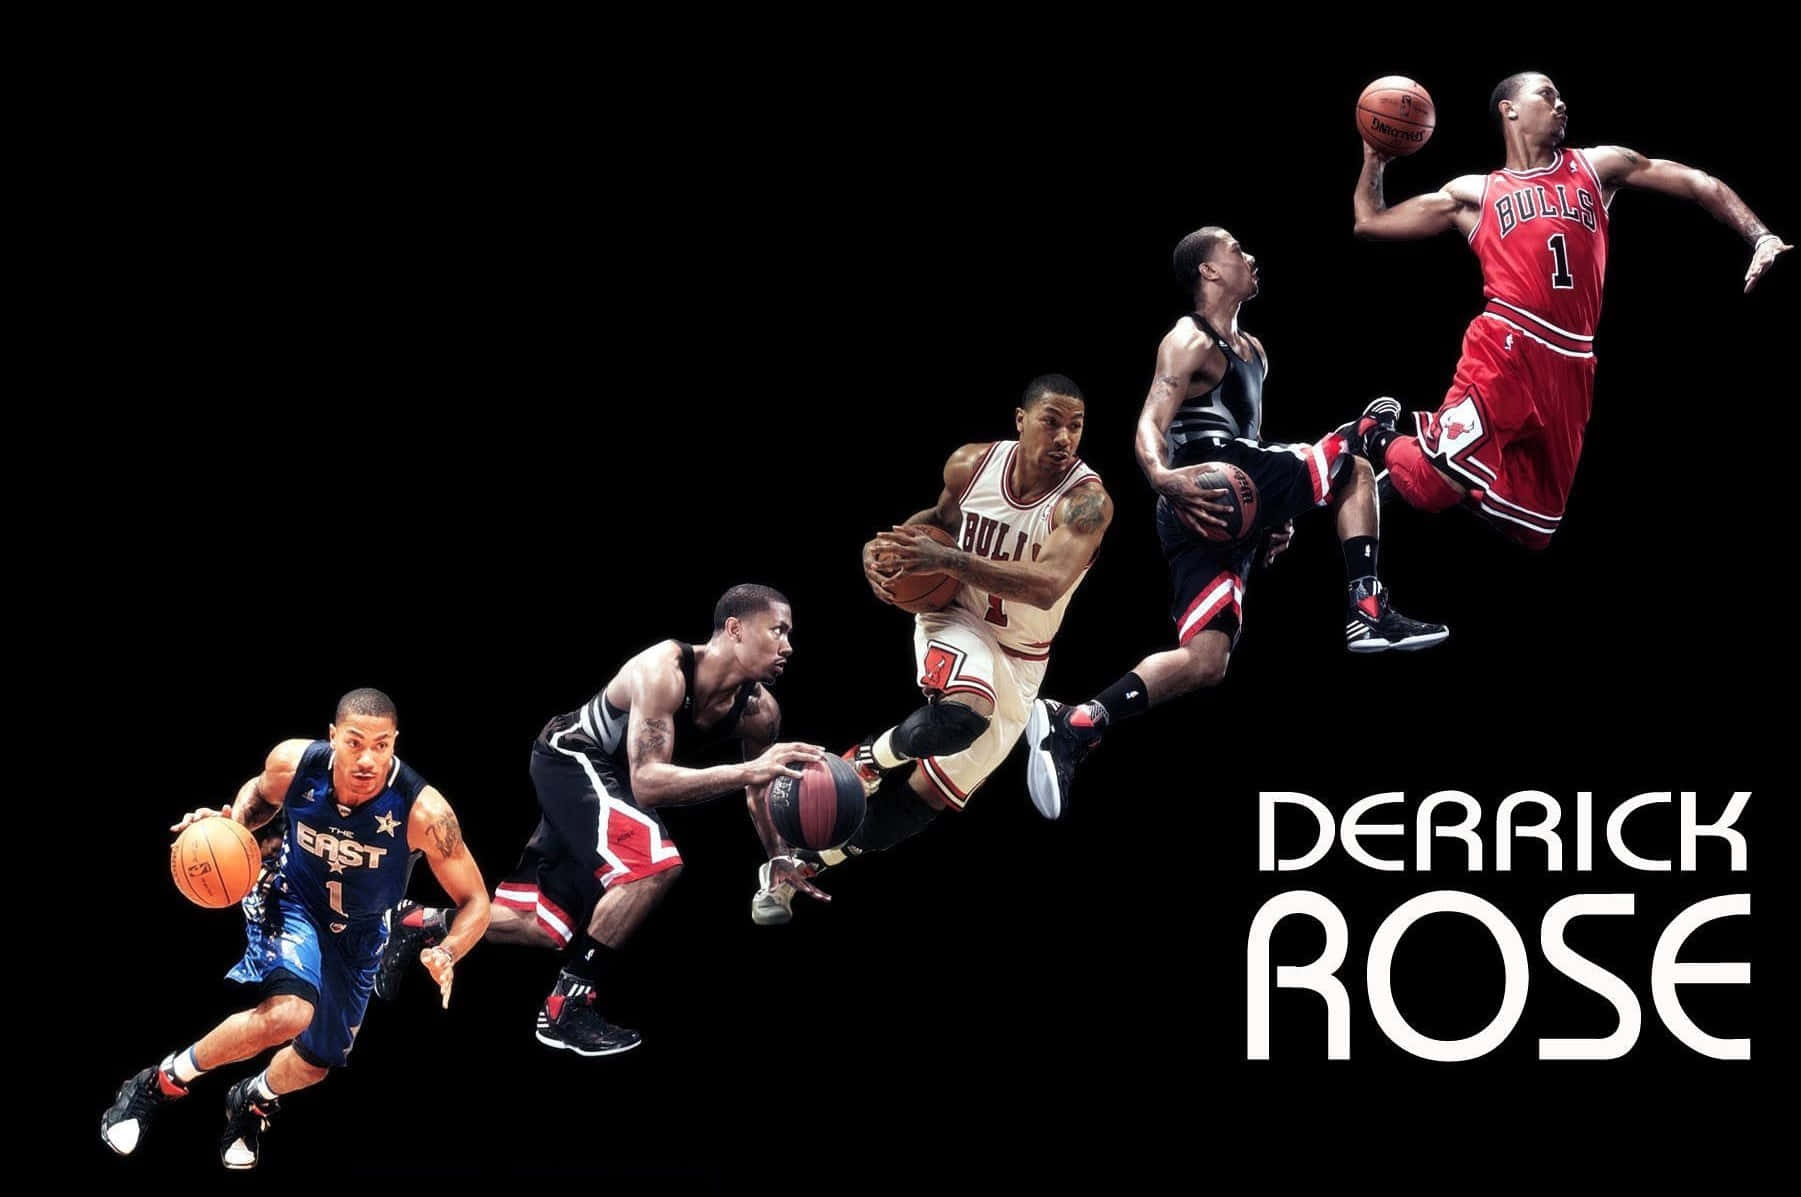 Derrickrose Poster - Derrick Rose-poster Wallpaper